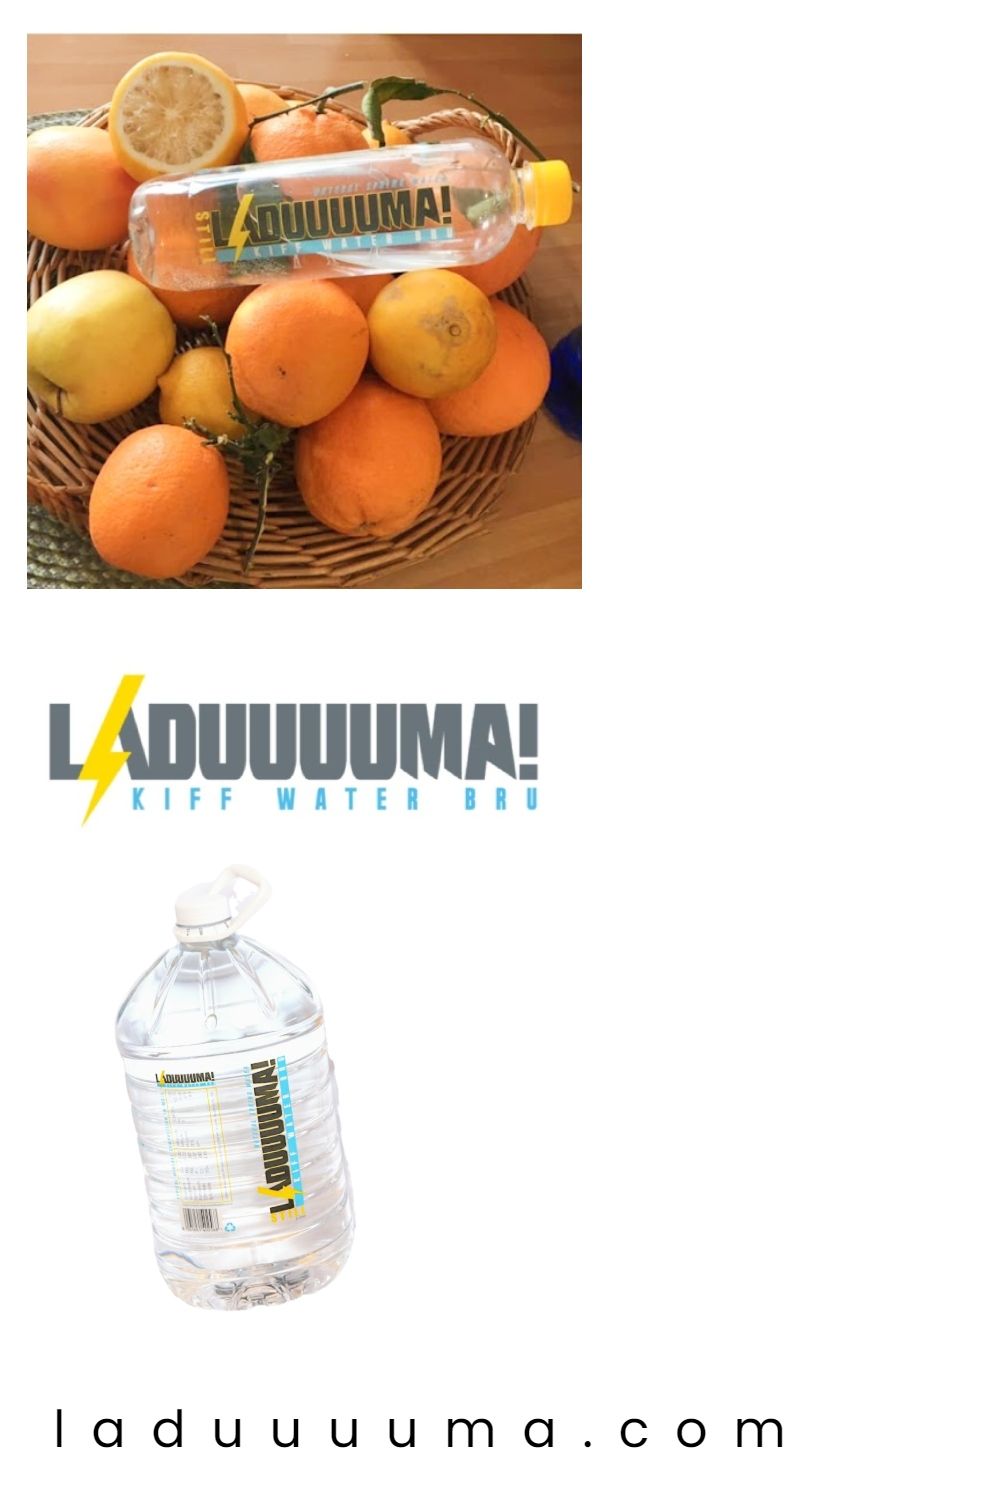 Laduuuuma.com order bottled water online